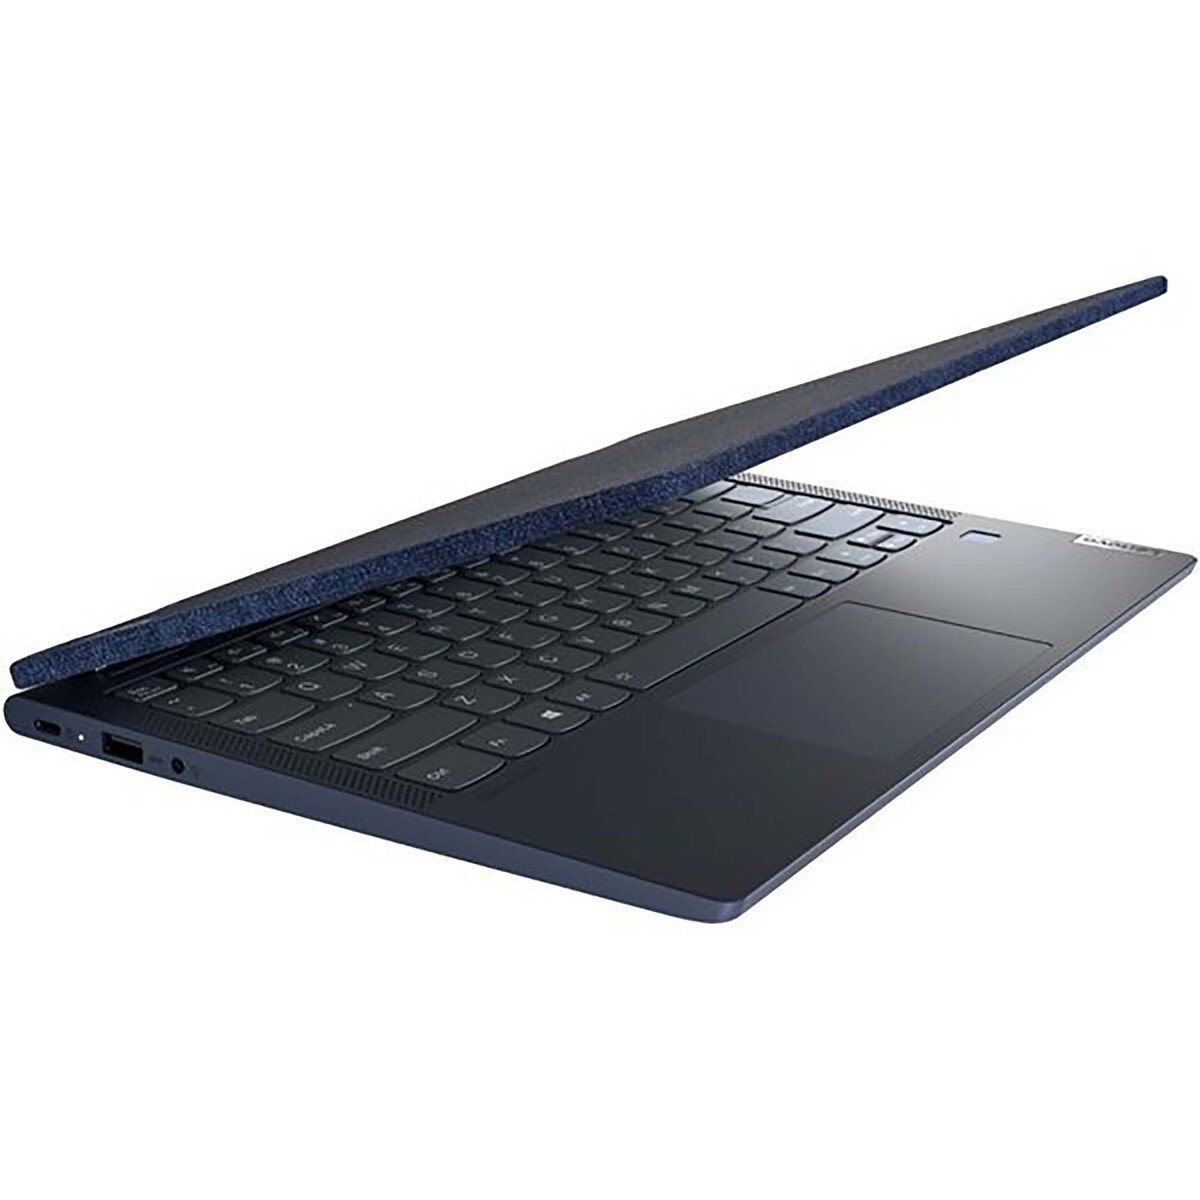 Lenovo Yoga 6,2in1 Notebook(82ND00AJAX),AMD Ryzen 5 5500U,8GB RAM,512GB  SSD, 13.3FHD,Integrated AMD Radeon Graphics,Windows 11,Abyss  Blue,English-Arabic Keyboard Online at Best Price, Convertible 2in1 Lap